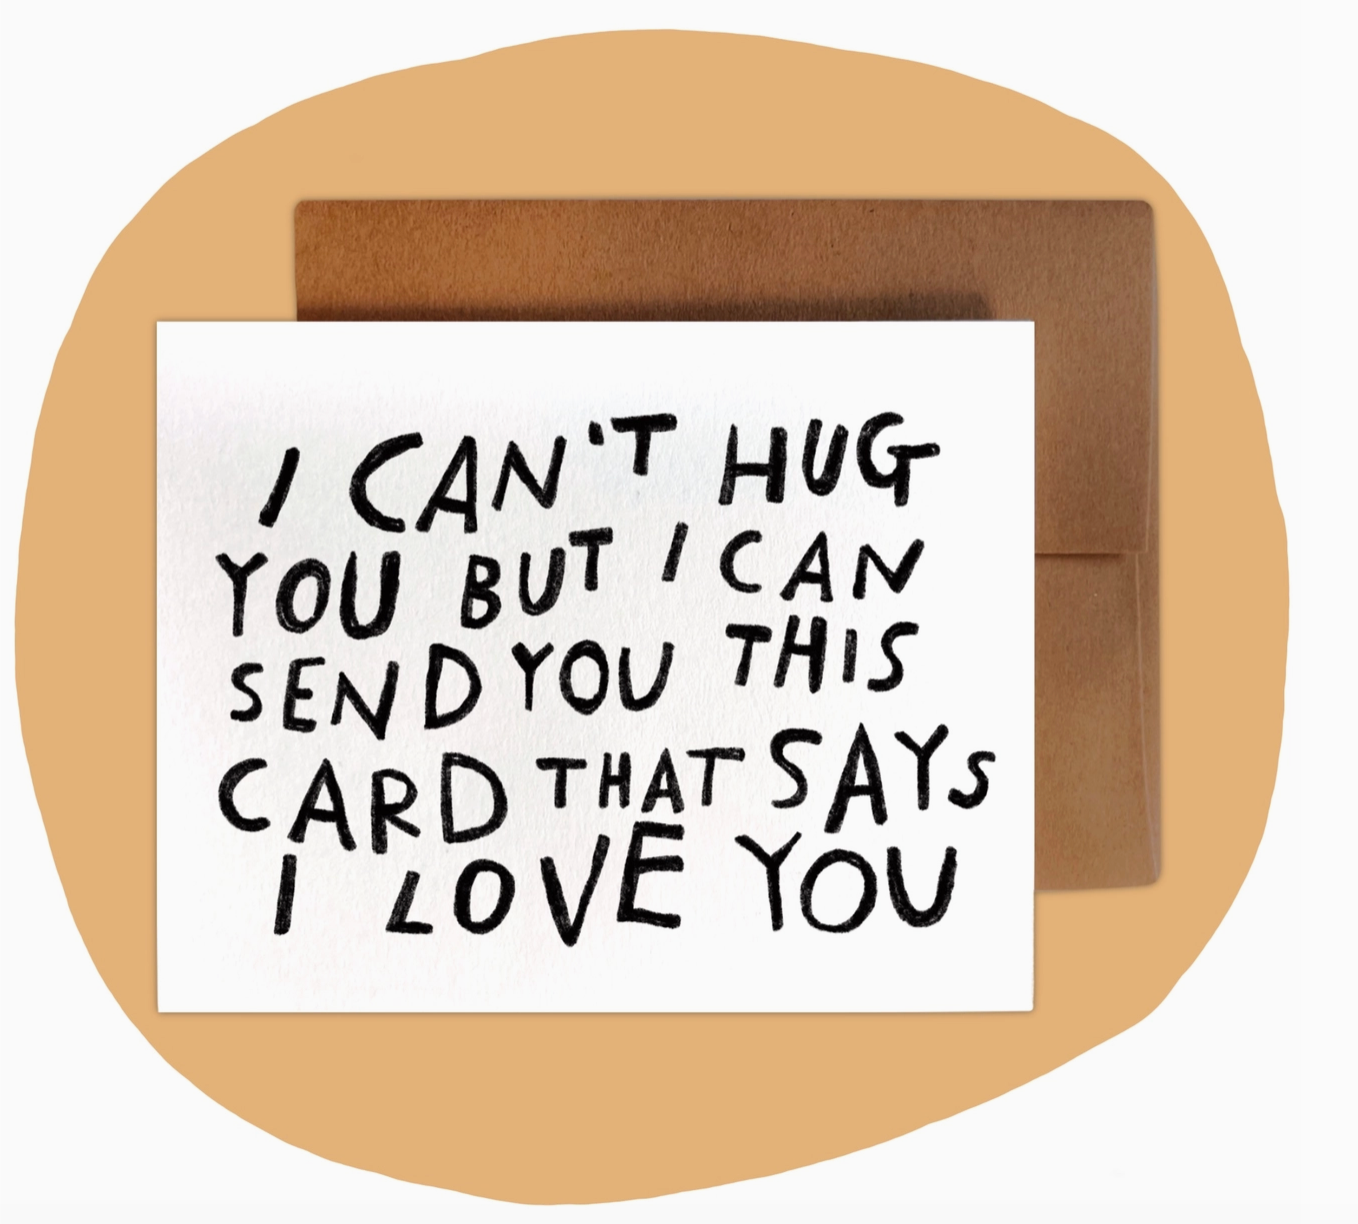 CAN’T HUG YOU Greeting Card - Polished Prints